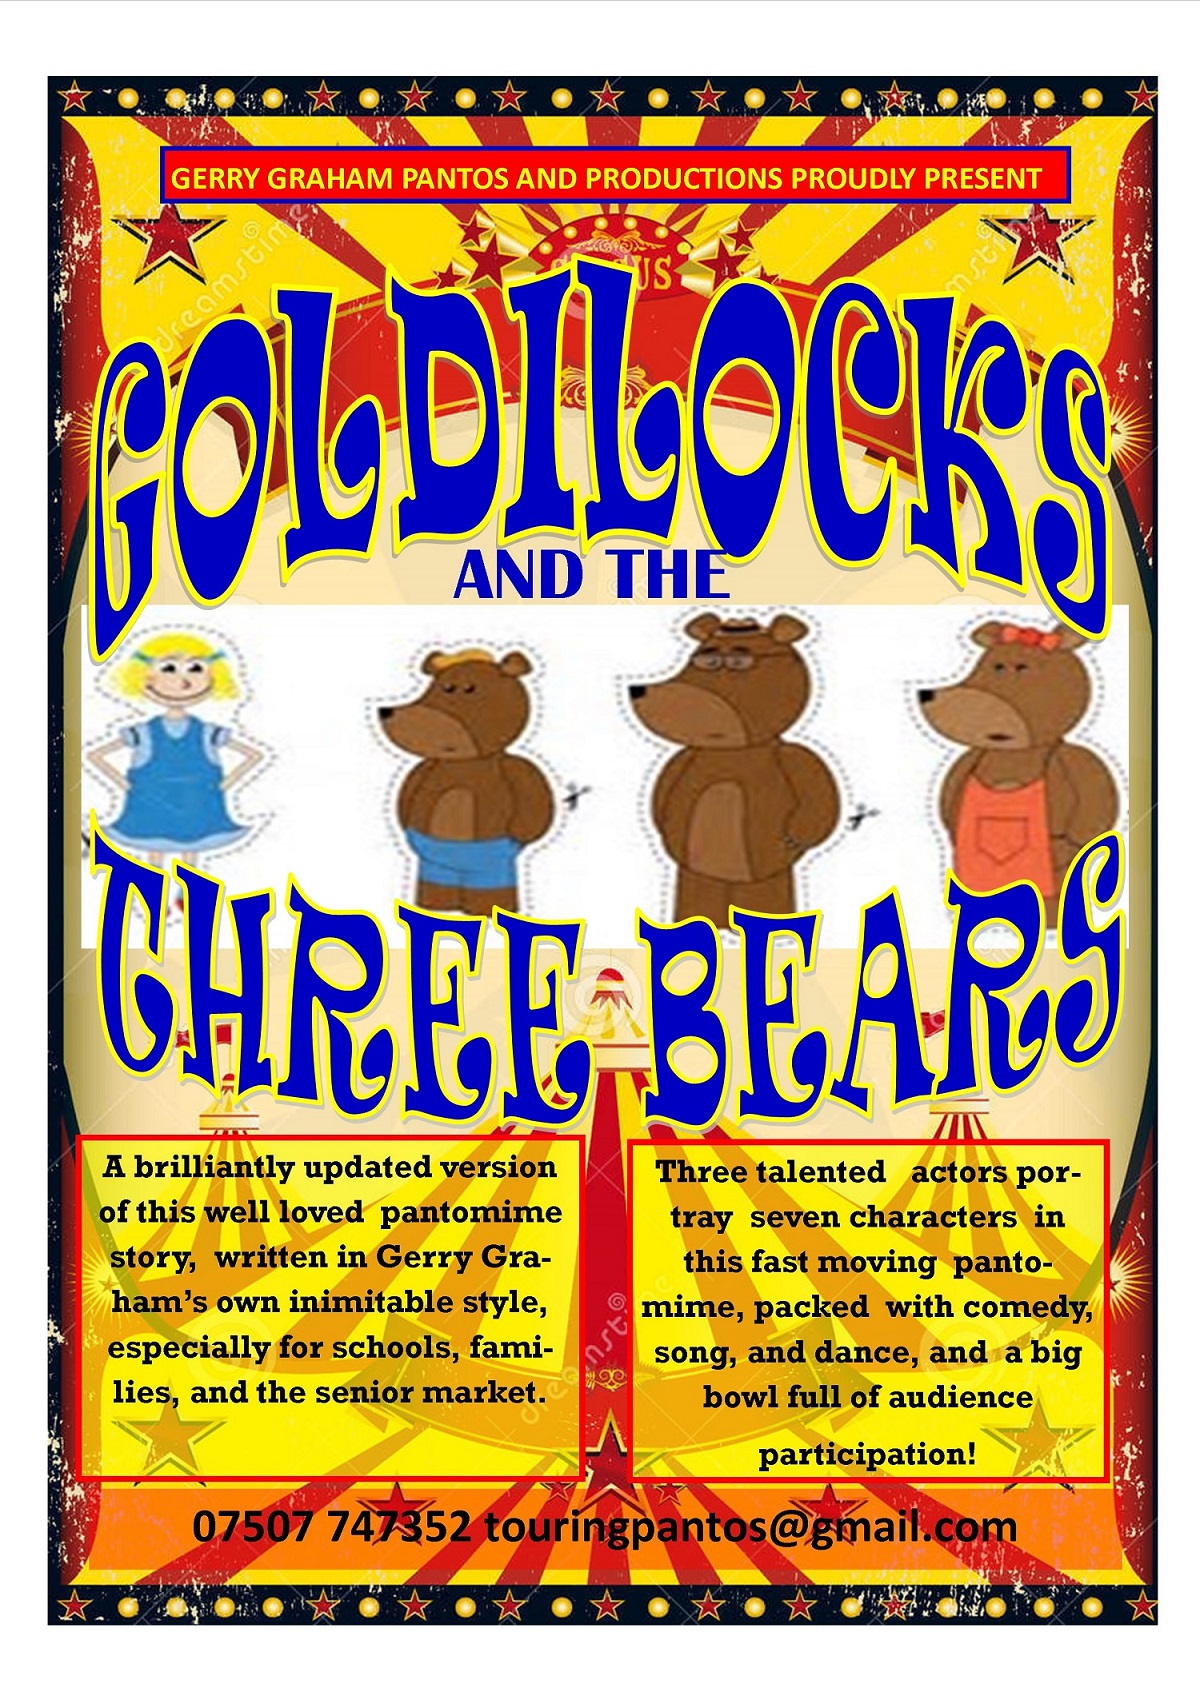 Goldilocks & the 3 bears touring pantomime